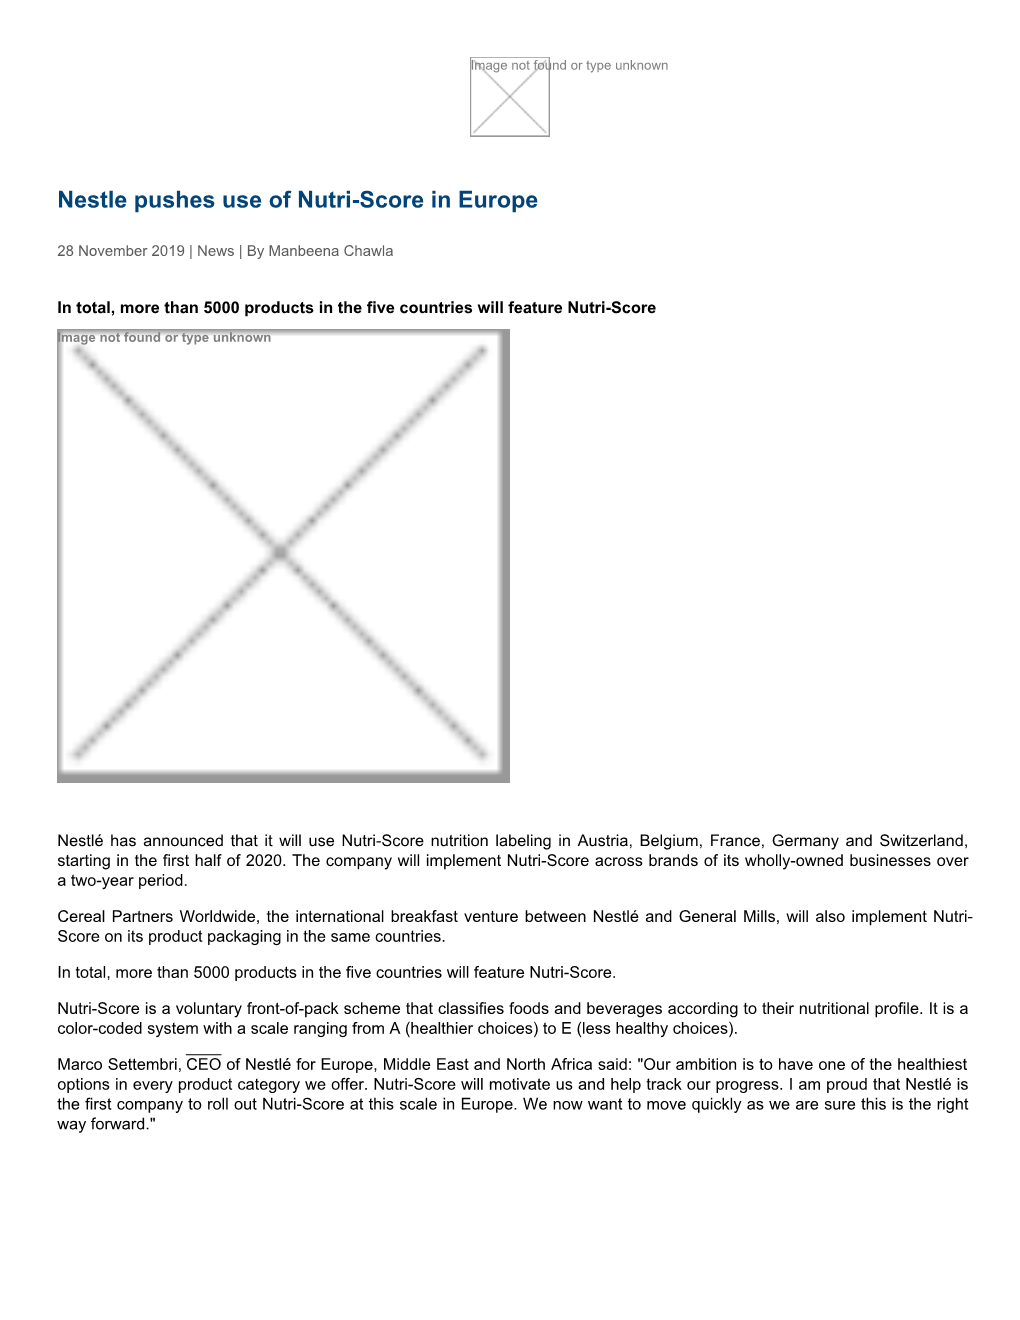 Nestle Pushes Use of Nutri-Score in Europe